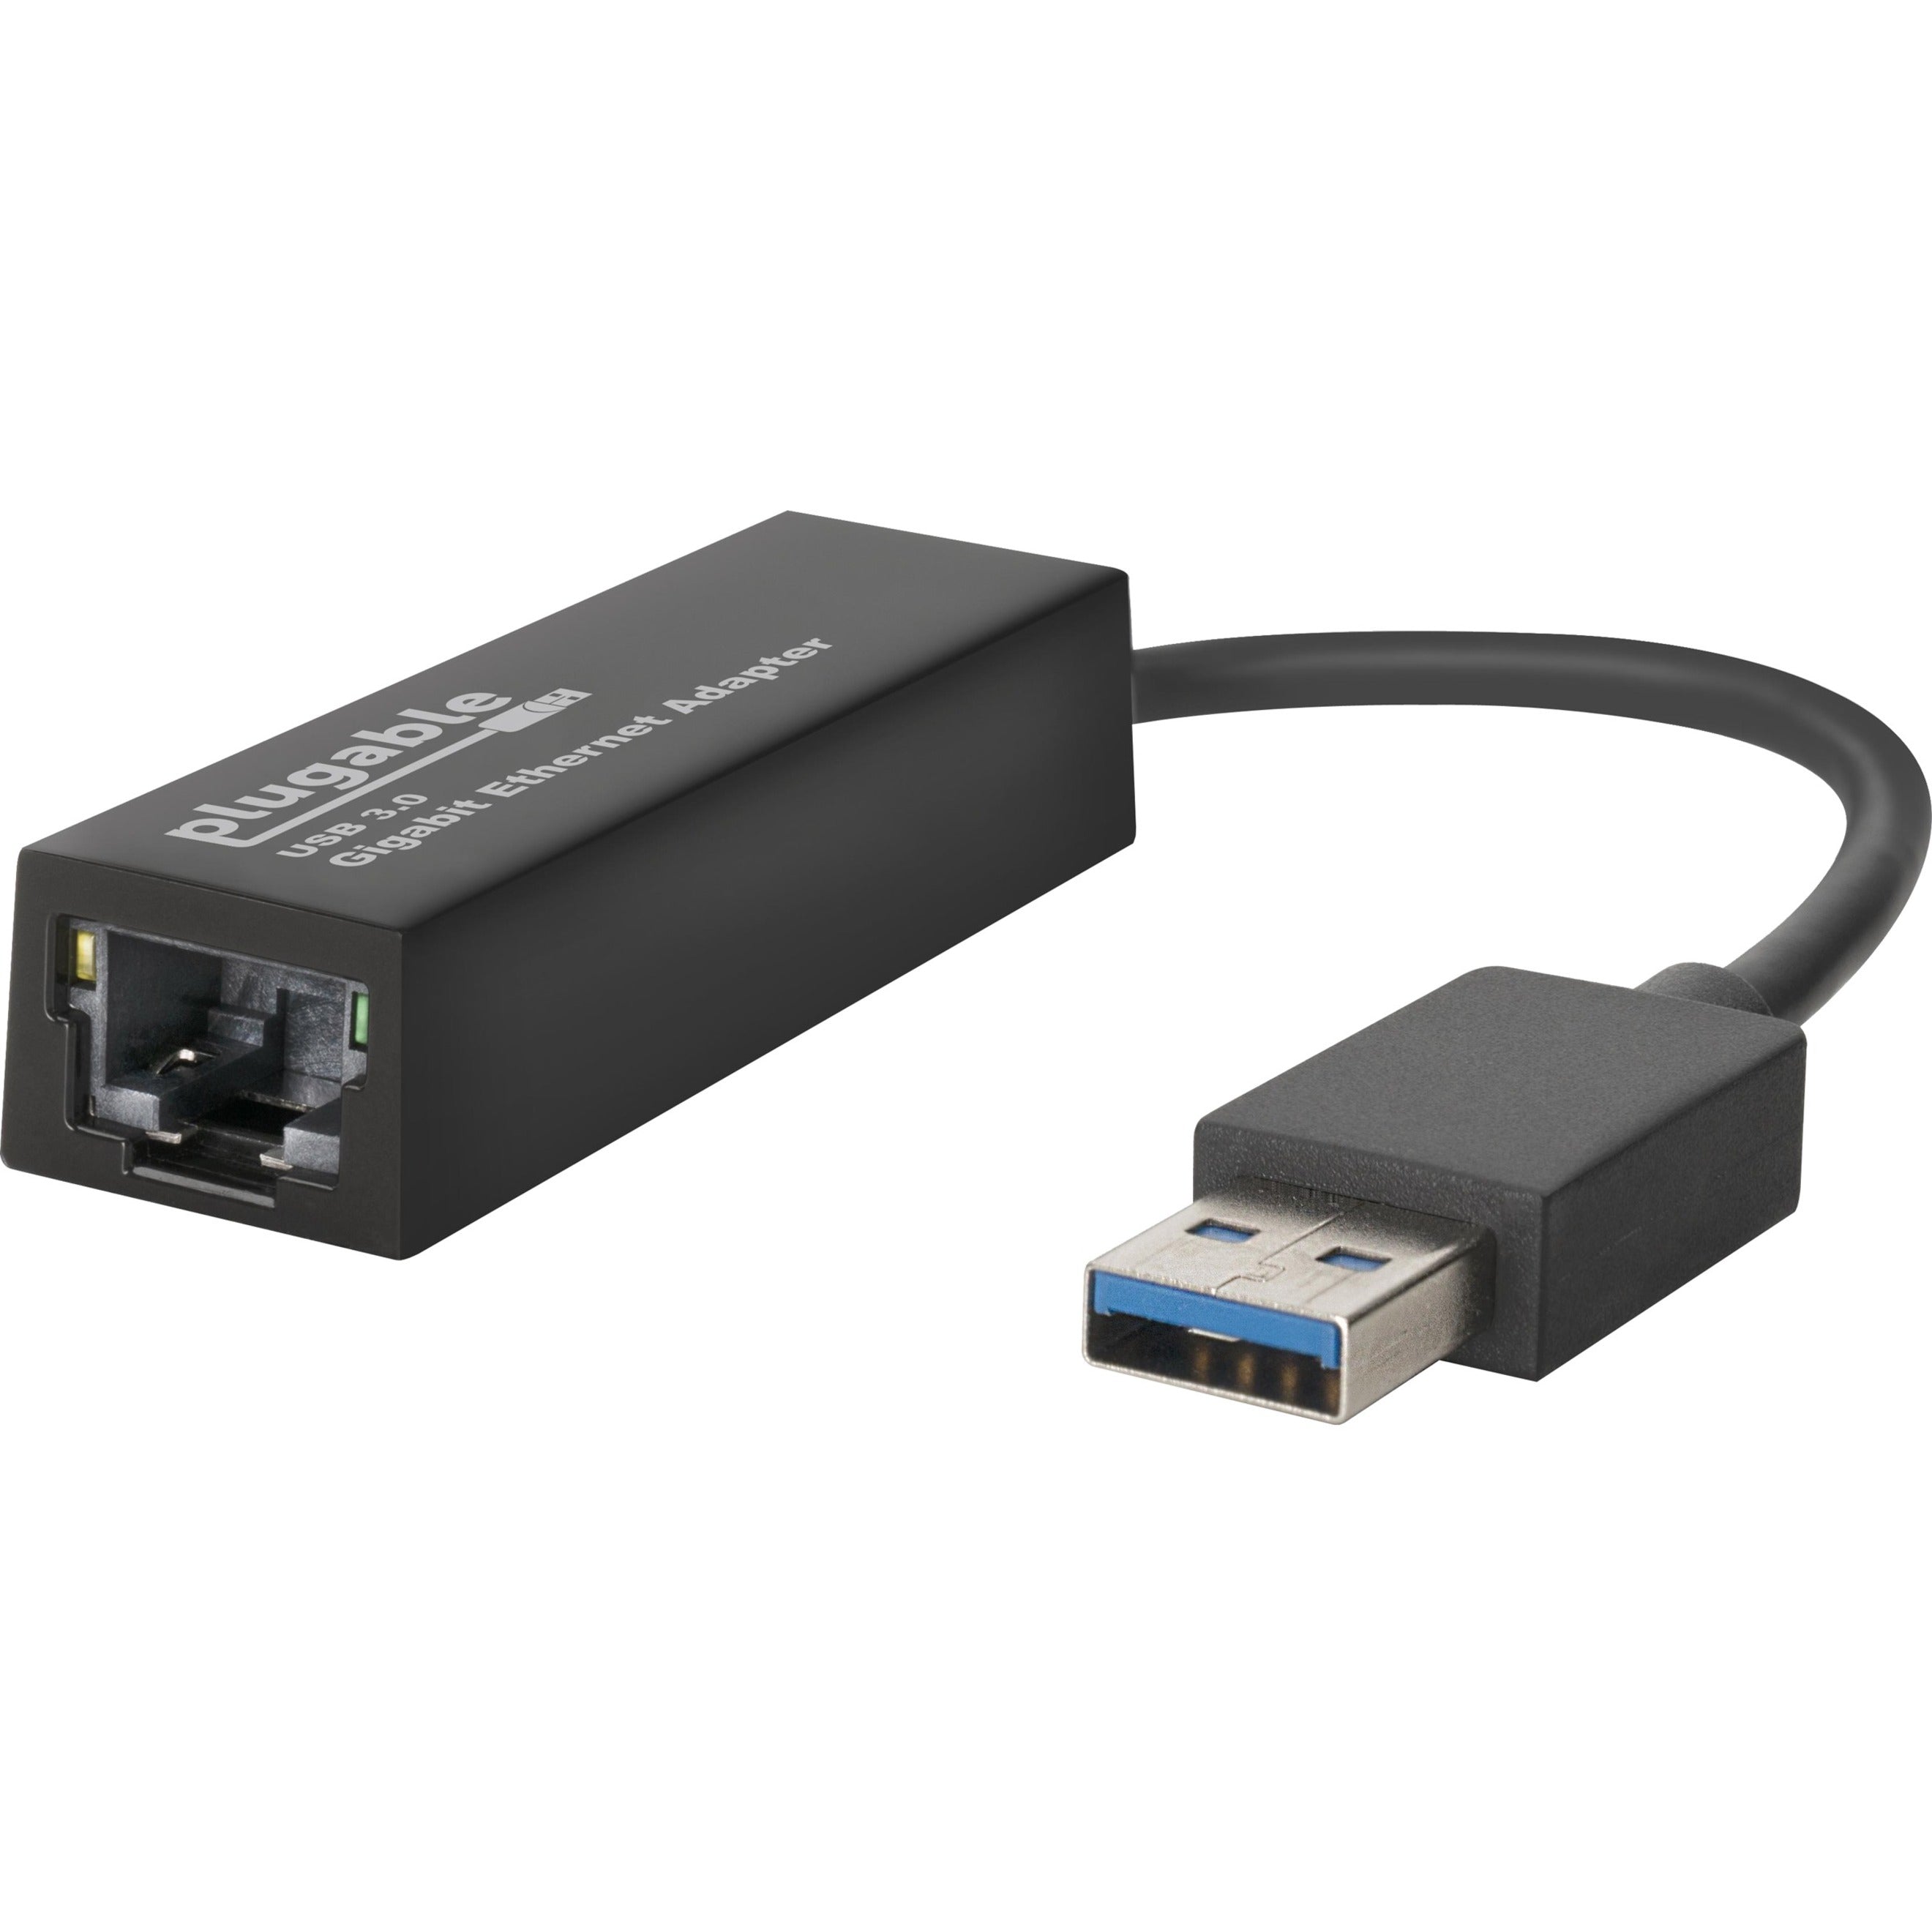 Plugable USB3-E1000 USB to Ethernet Adapter USB 3.0 to Gigabit Ethernet High-Speed Data Transfer